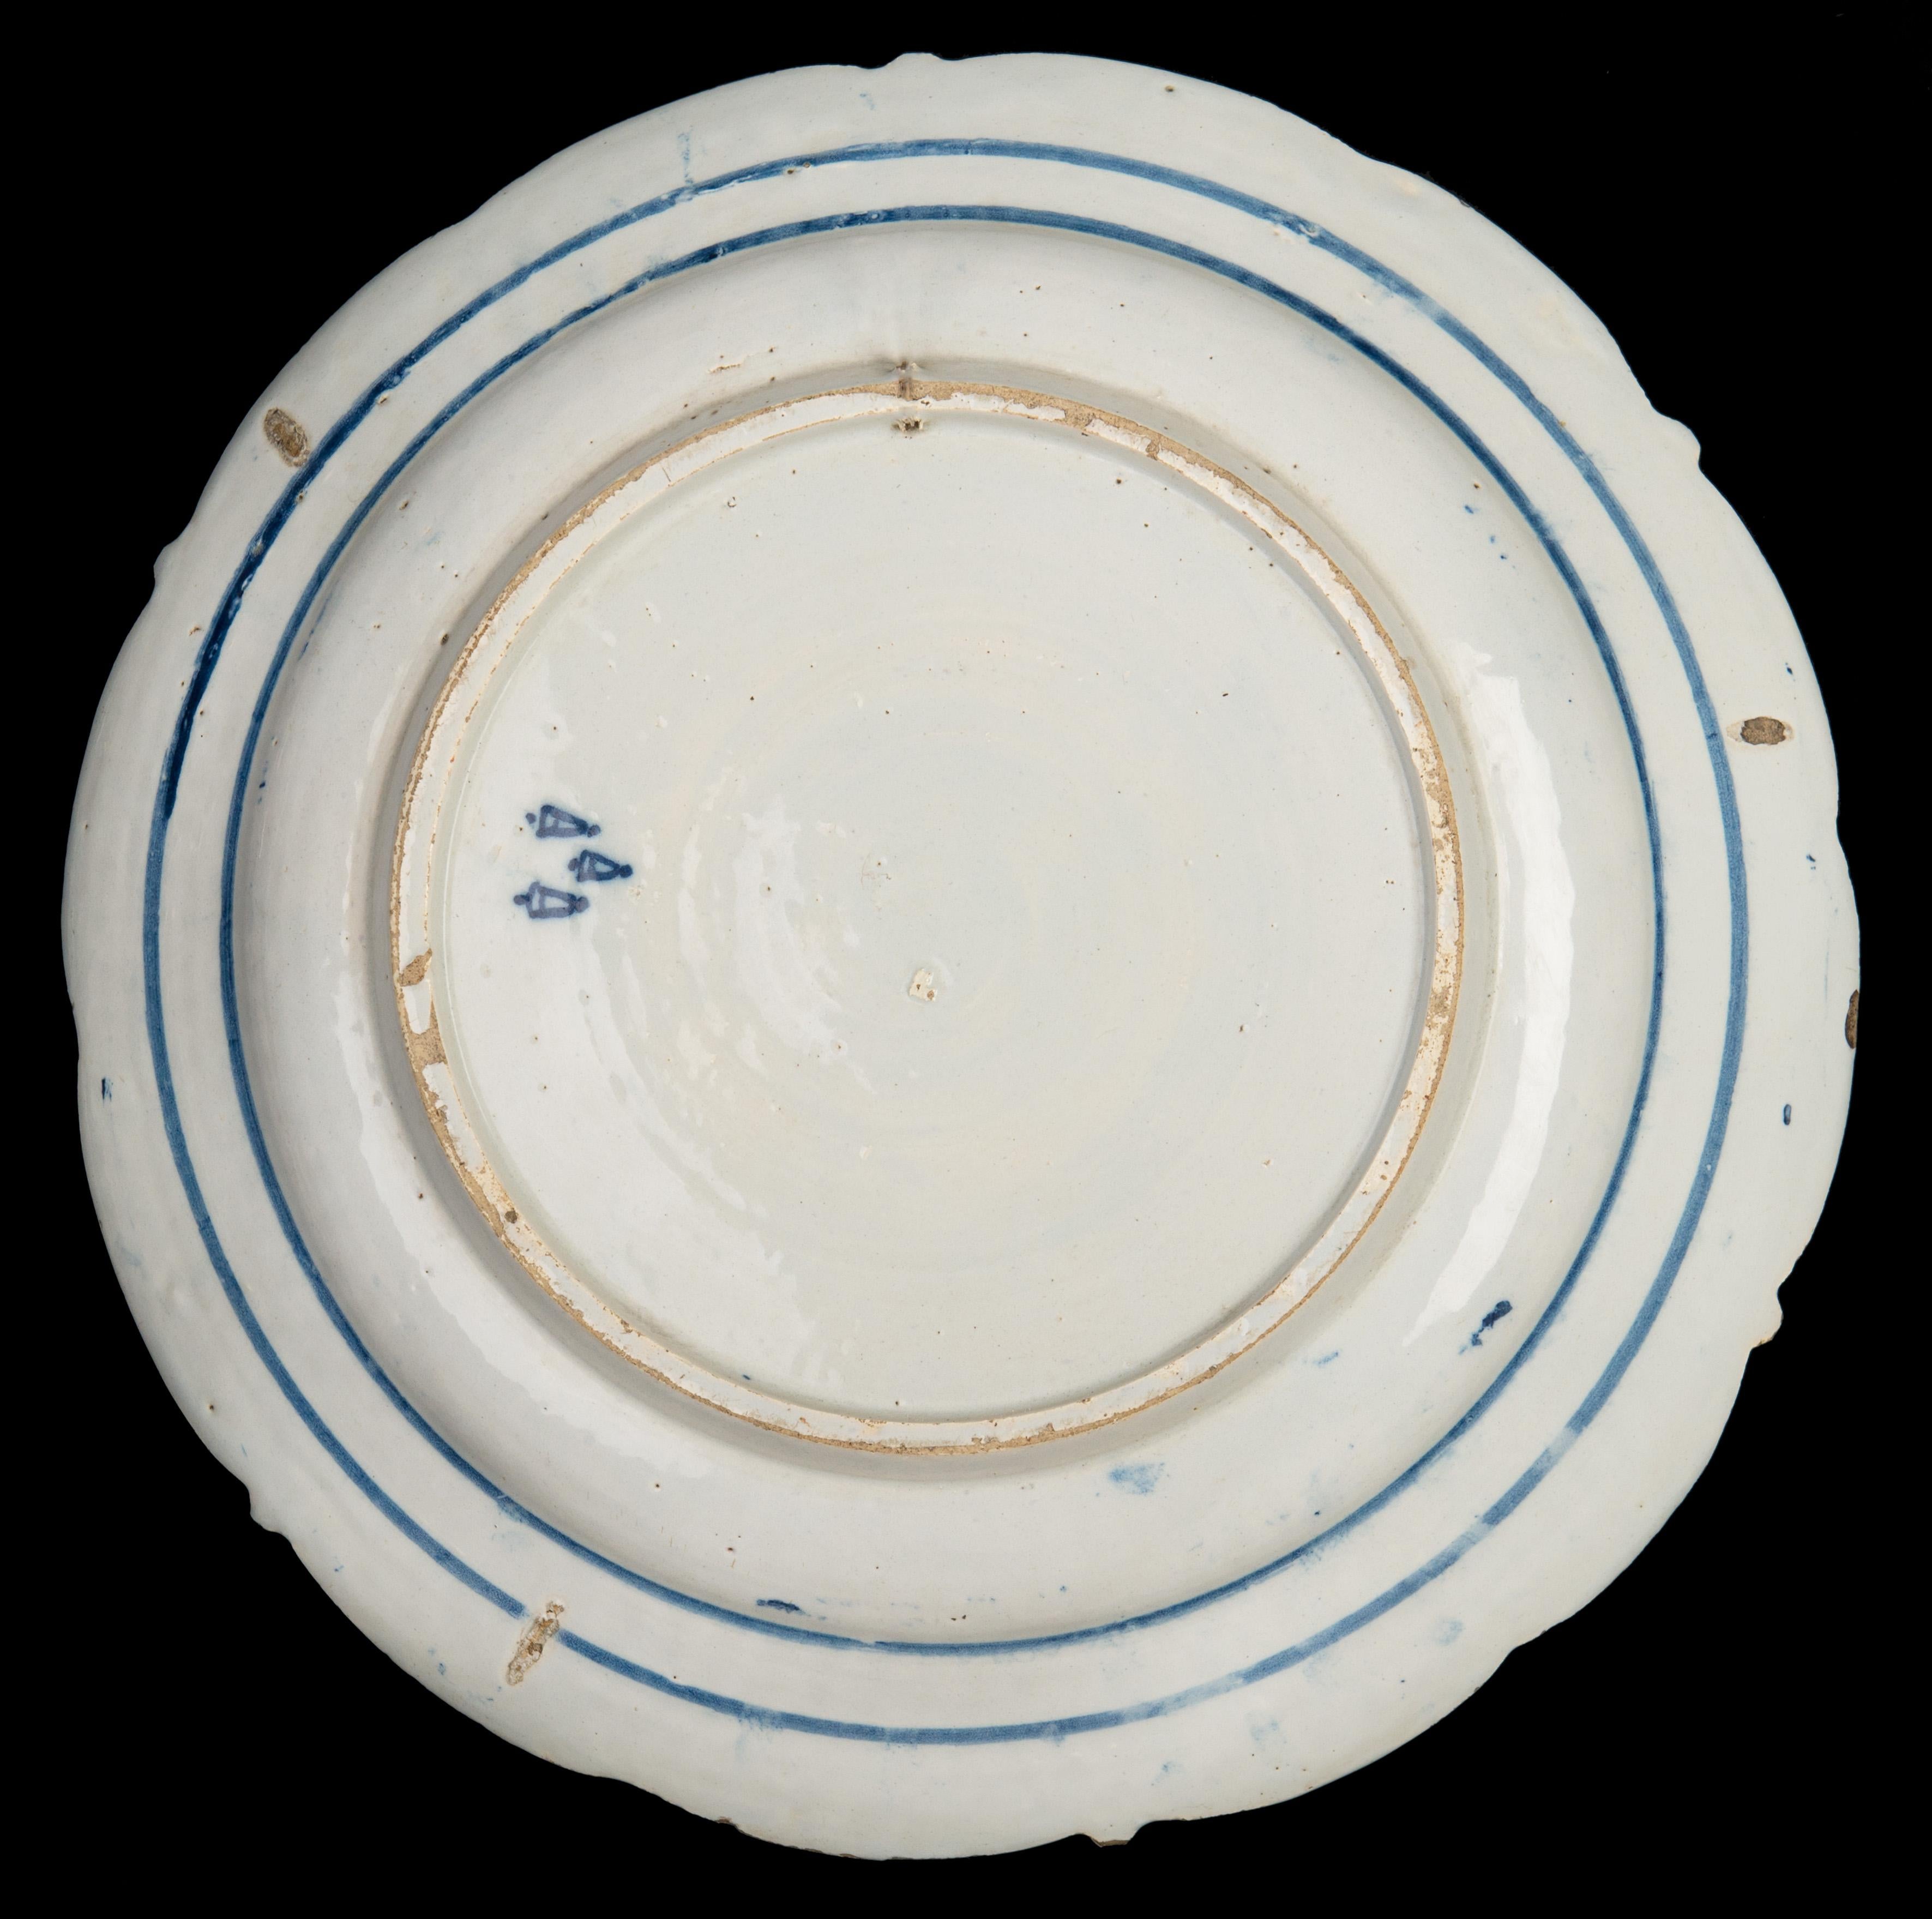 modern delft pottery marks